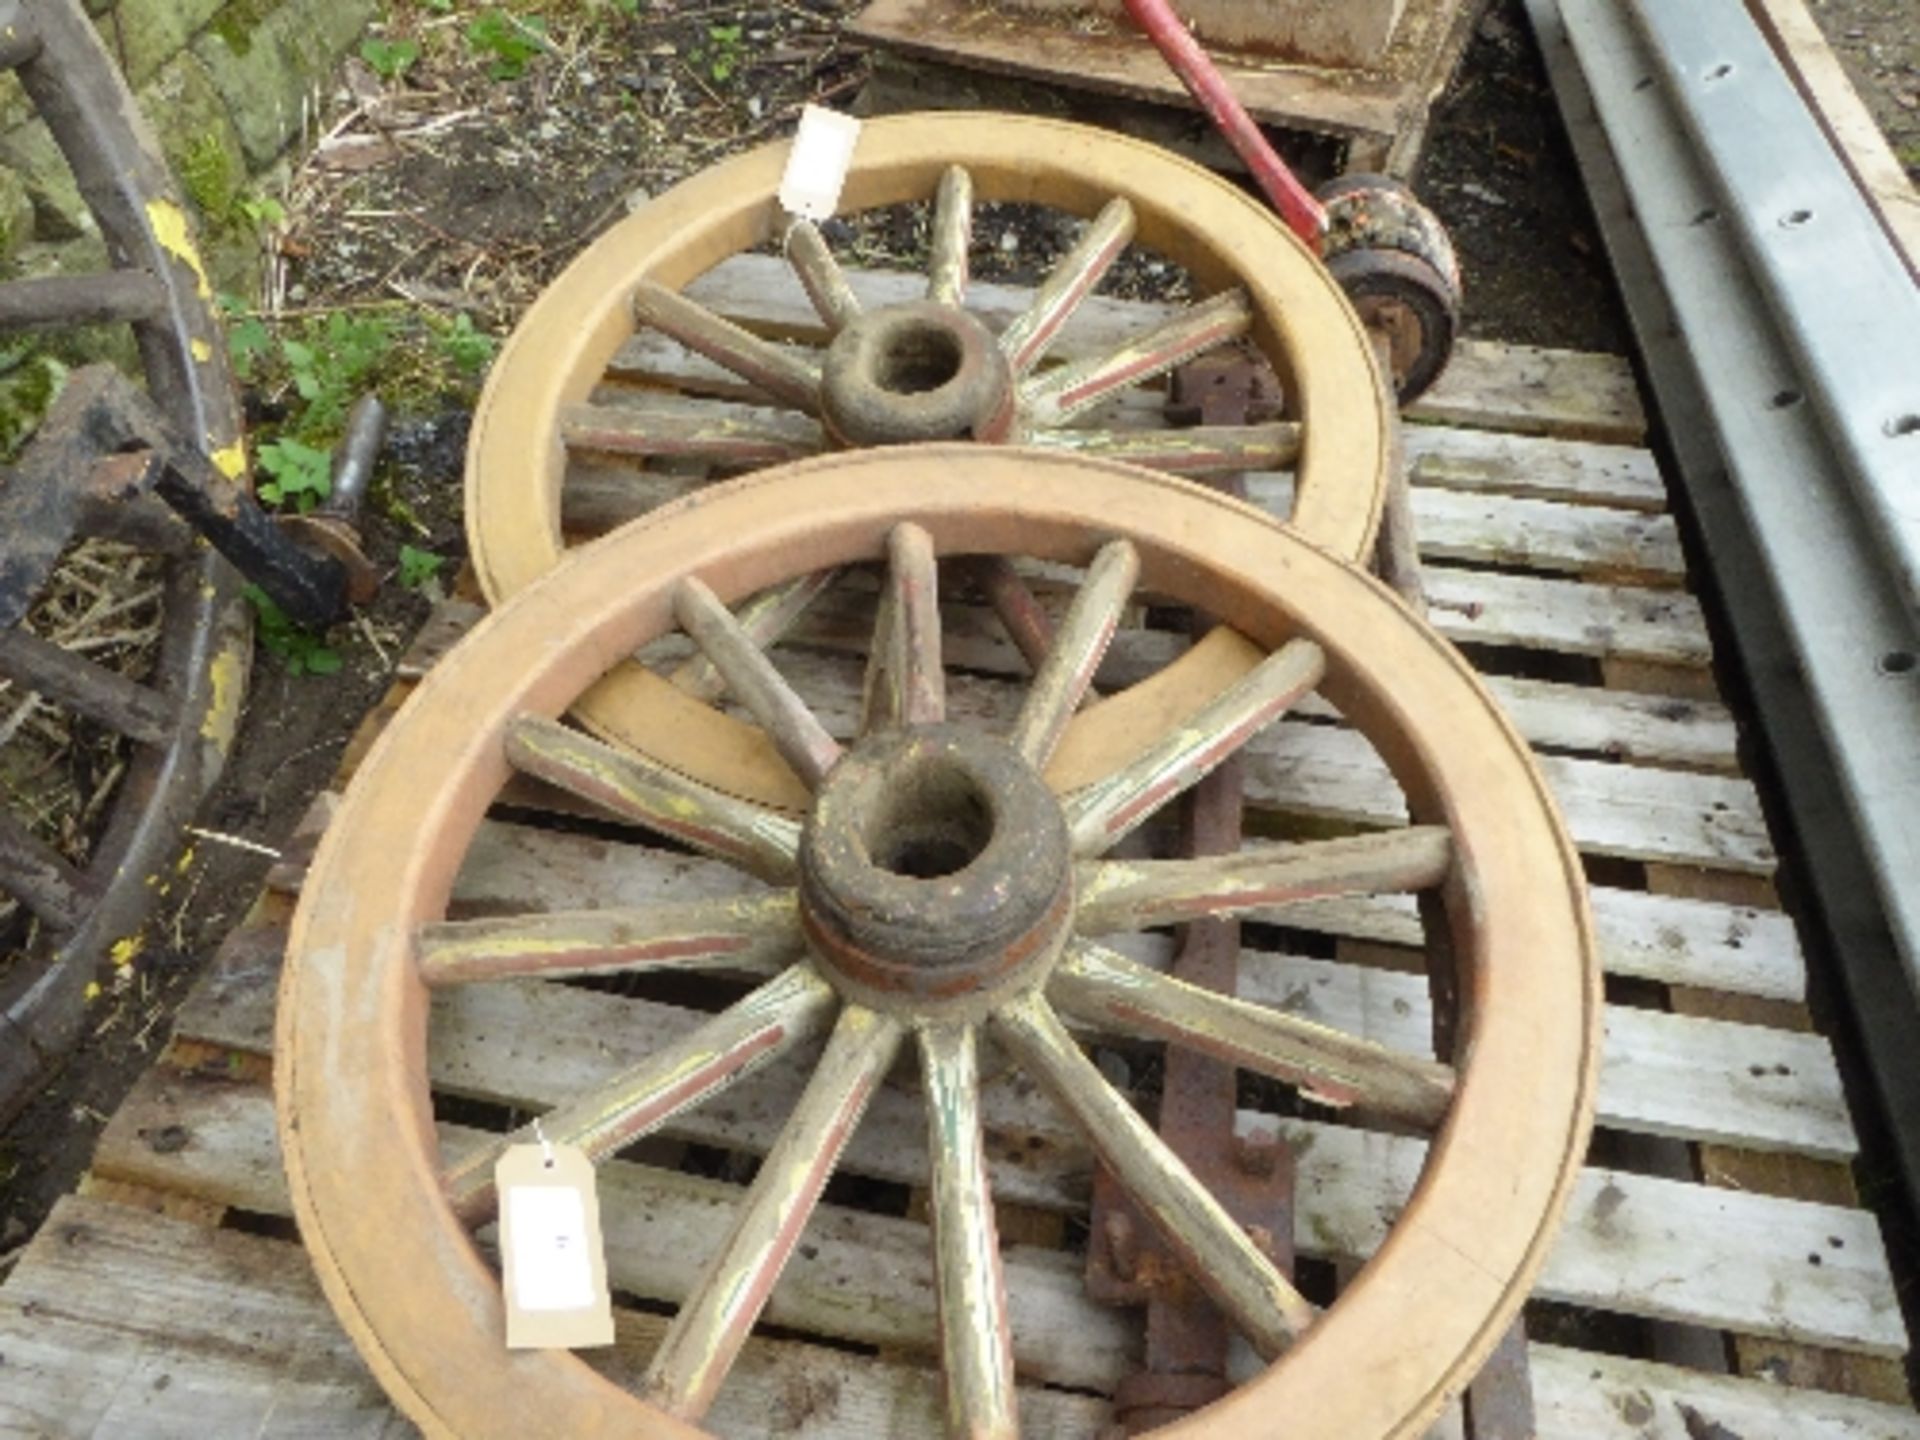 a pair of metal tyred wheels and 2 metal axles